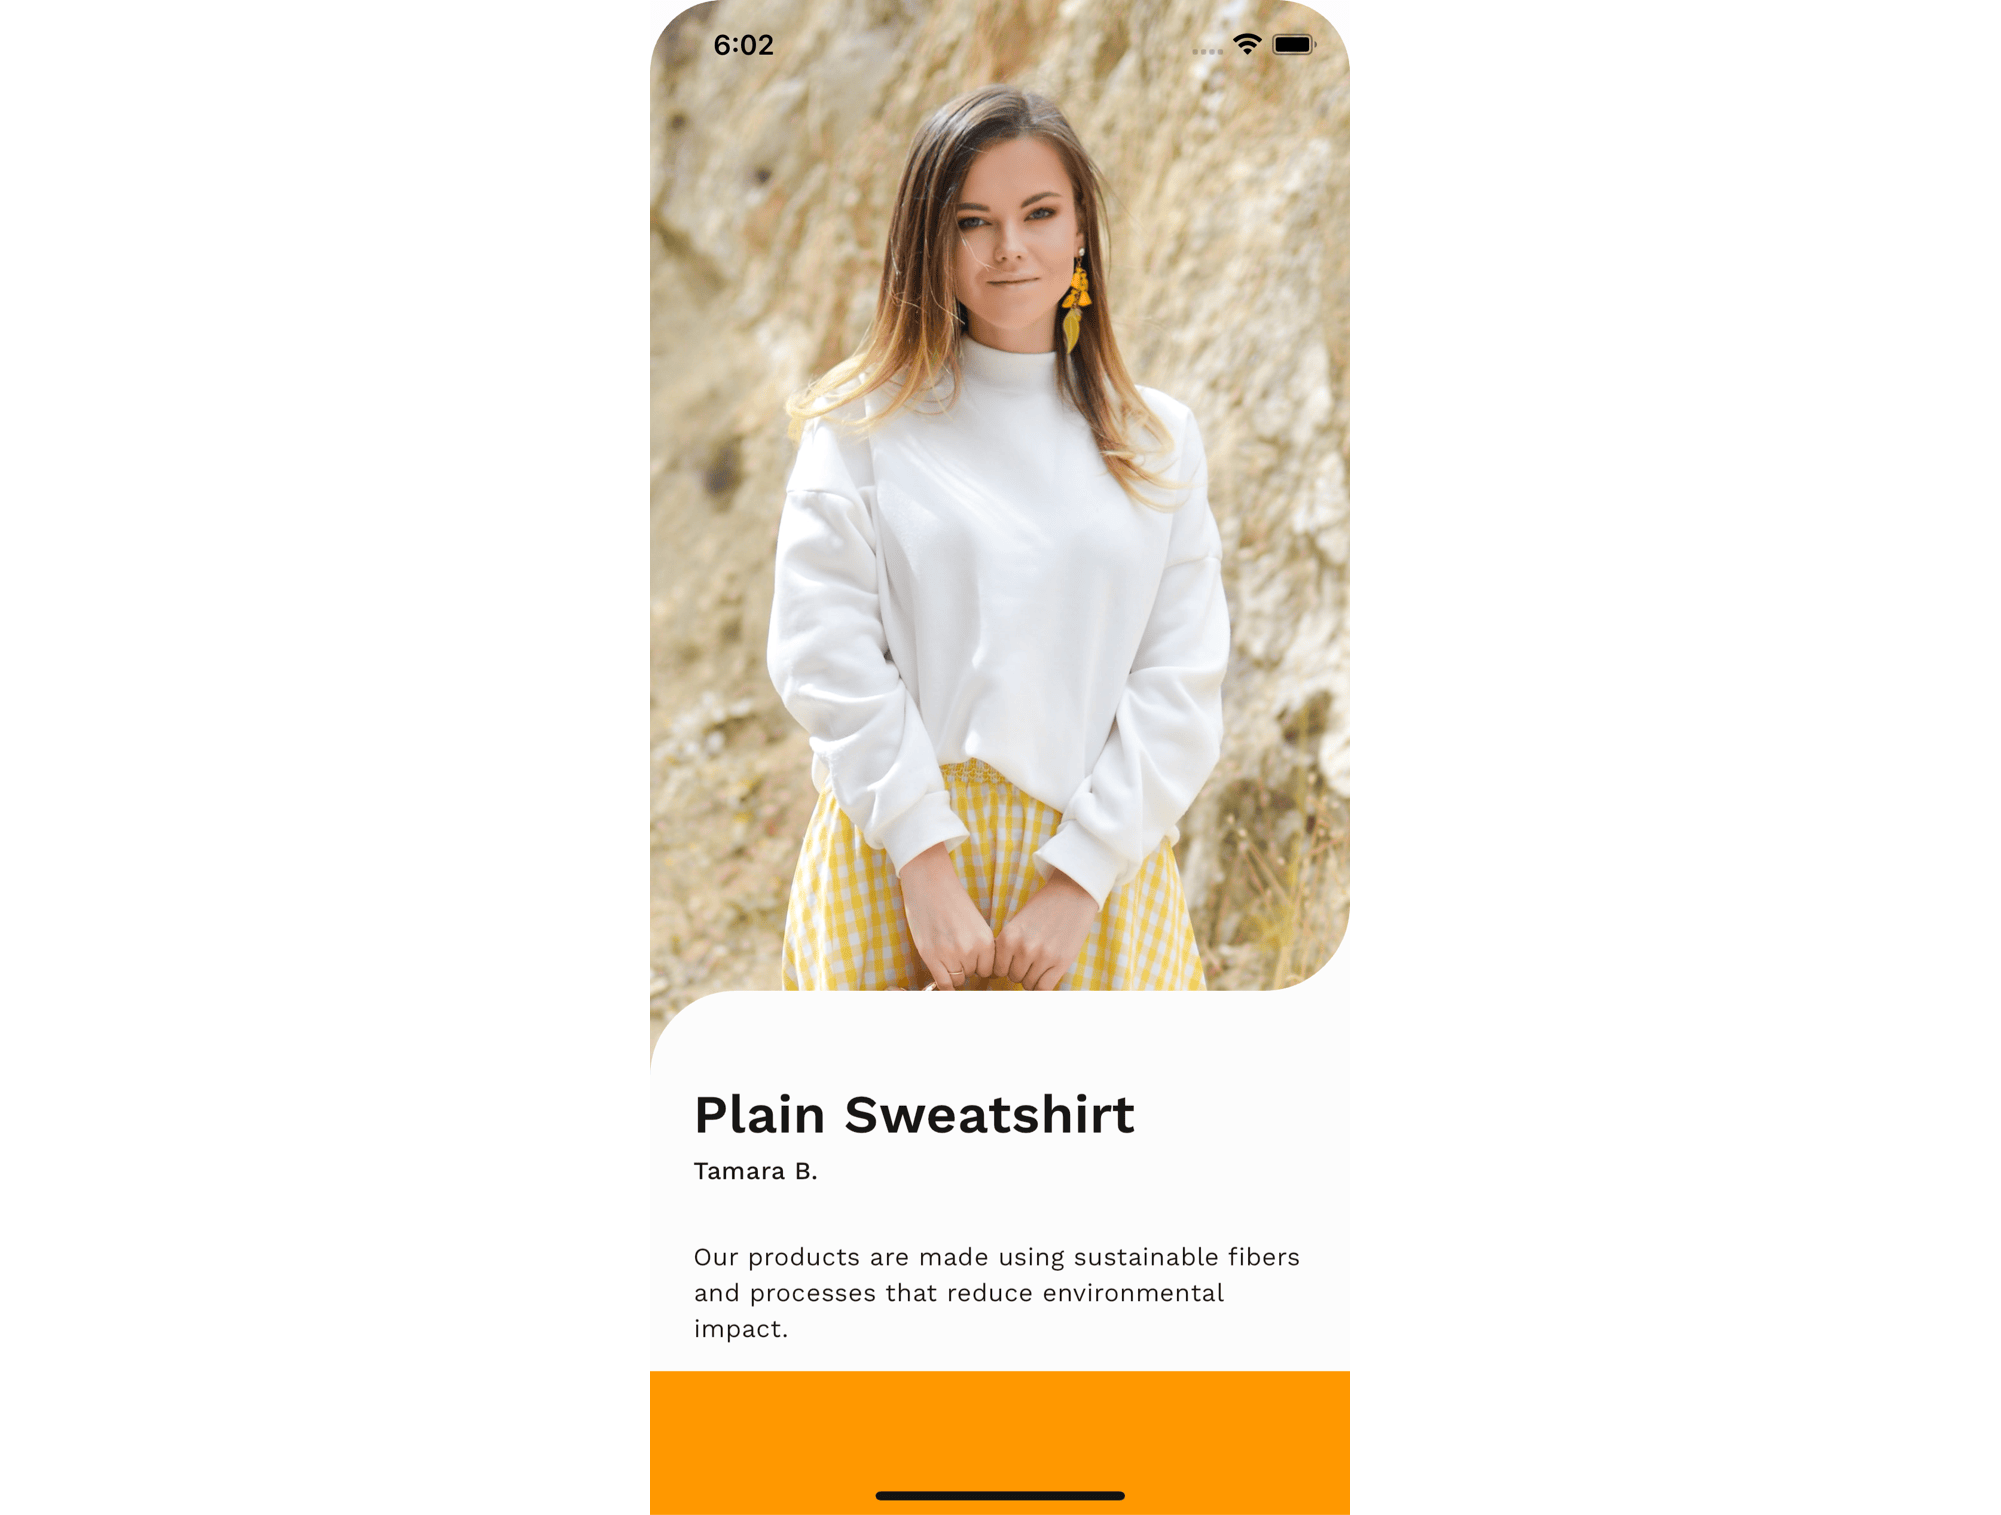 Flutter Design Challenge #1 - Product Page